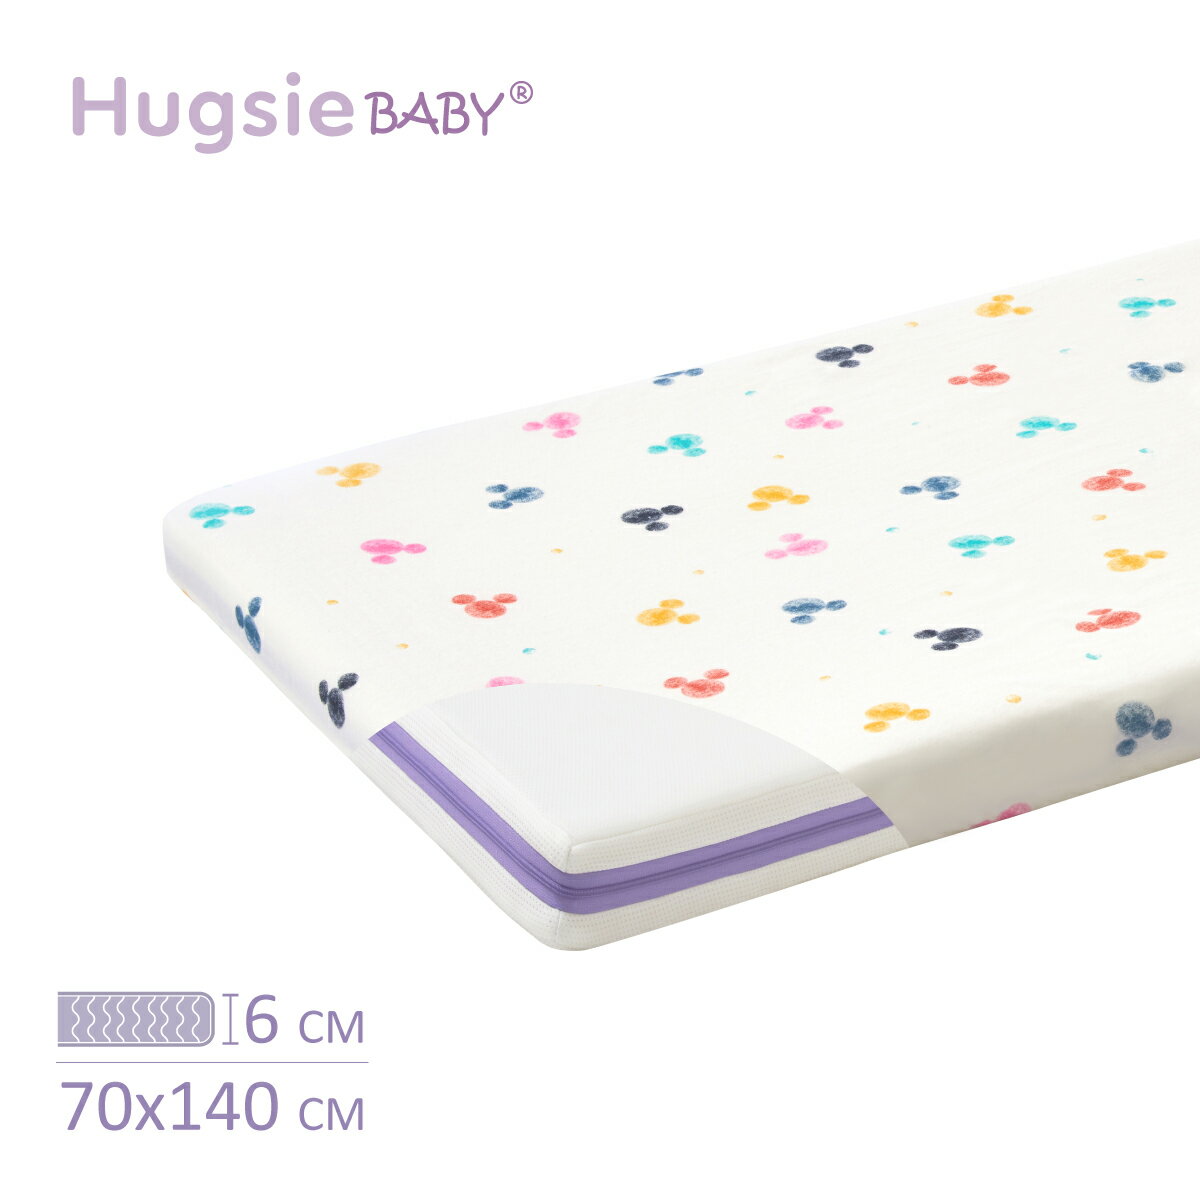 HugsieBABY迪士尼系列透氣水洗嬰兒床墊(附贈抗菌床單) 70×140★衛立兒生活館★